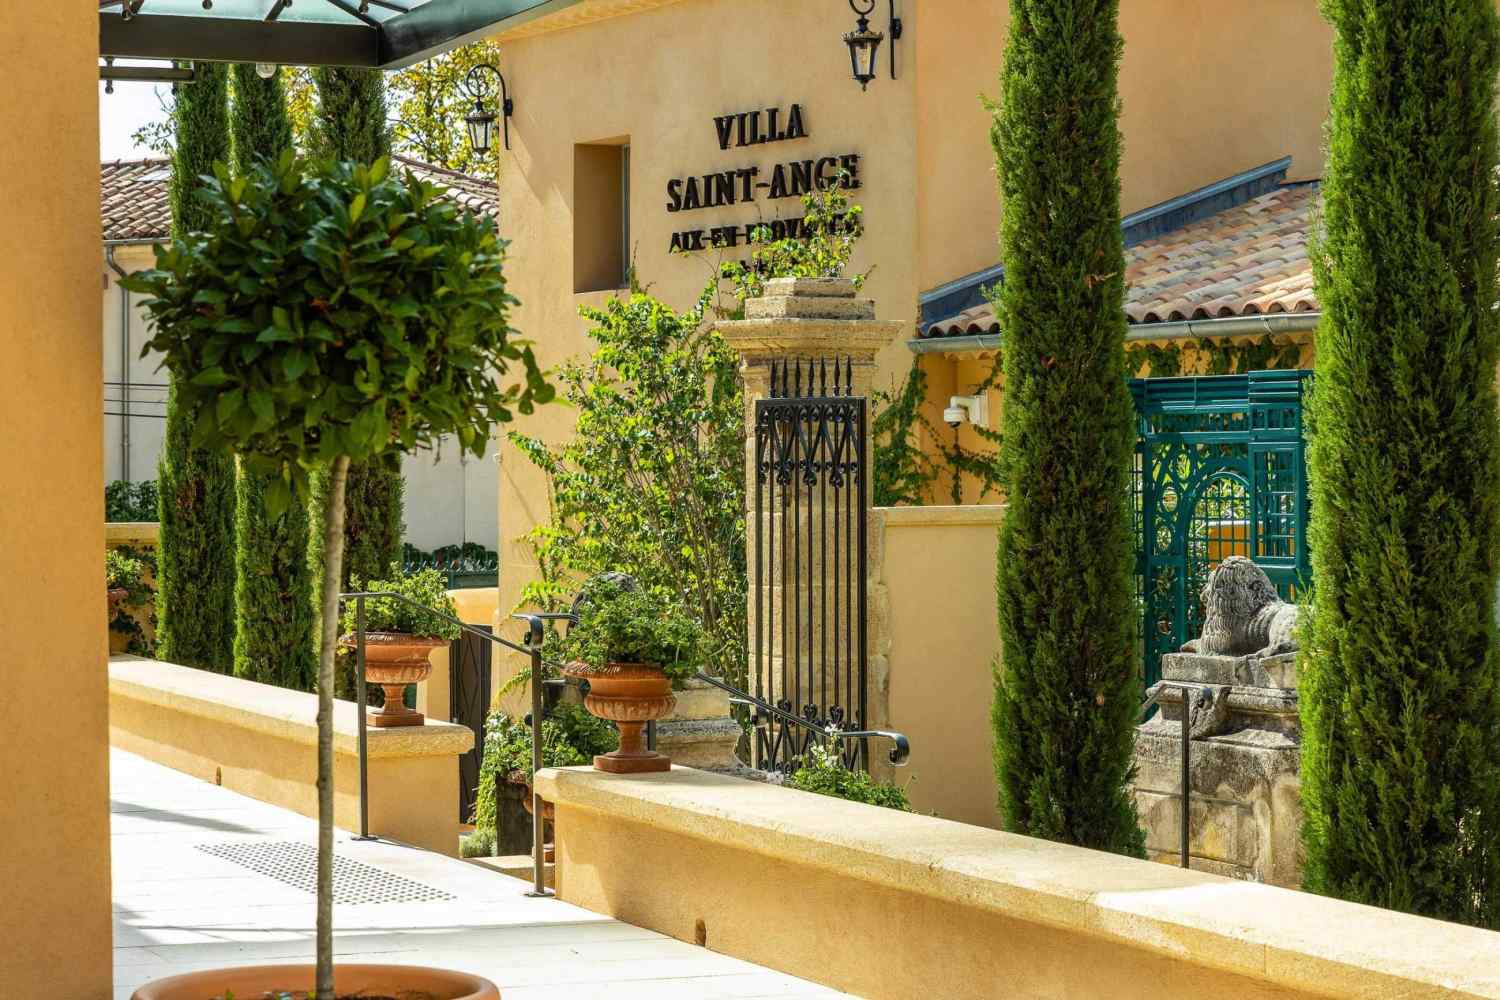 Villa Saint-Ange Aix En Provence - France